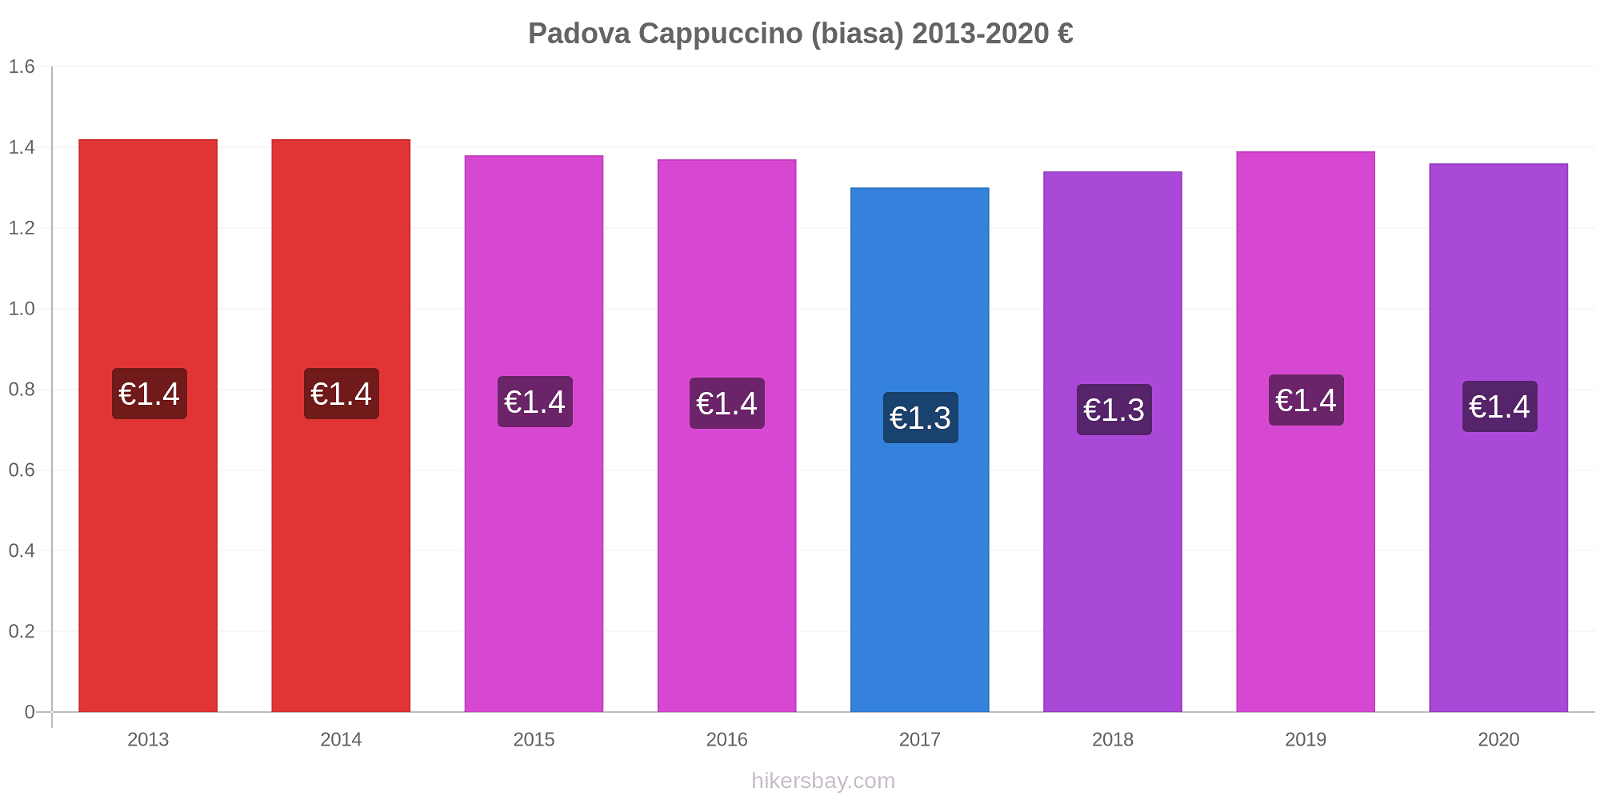 Padova perubahan harga Cappuccino (biasa) hikersbay.com